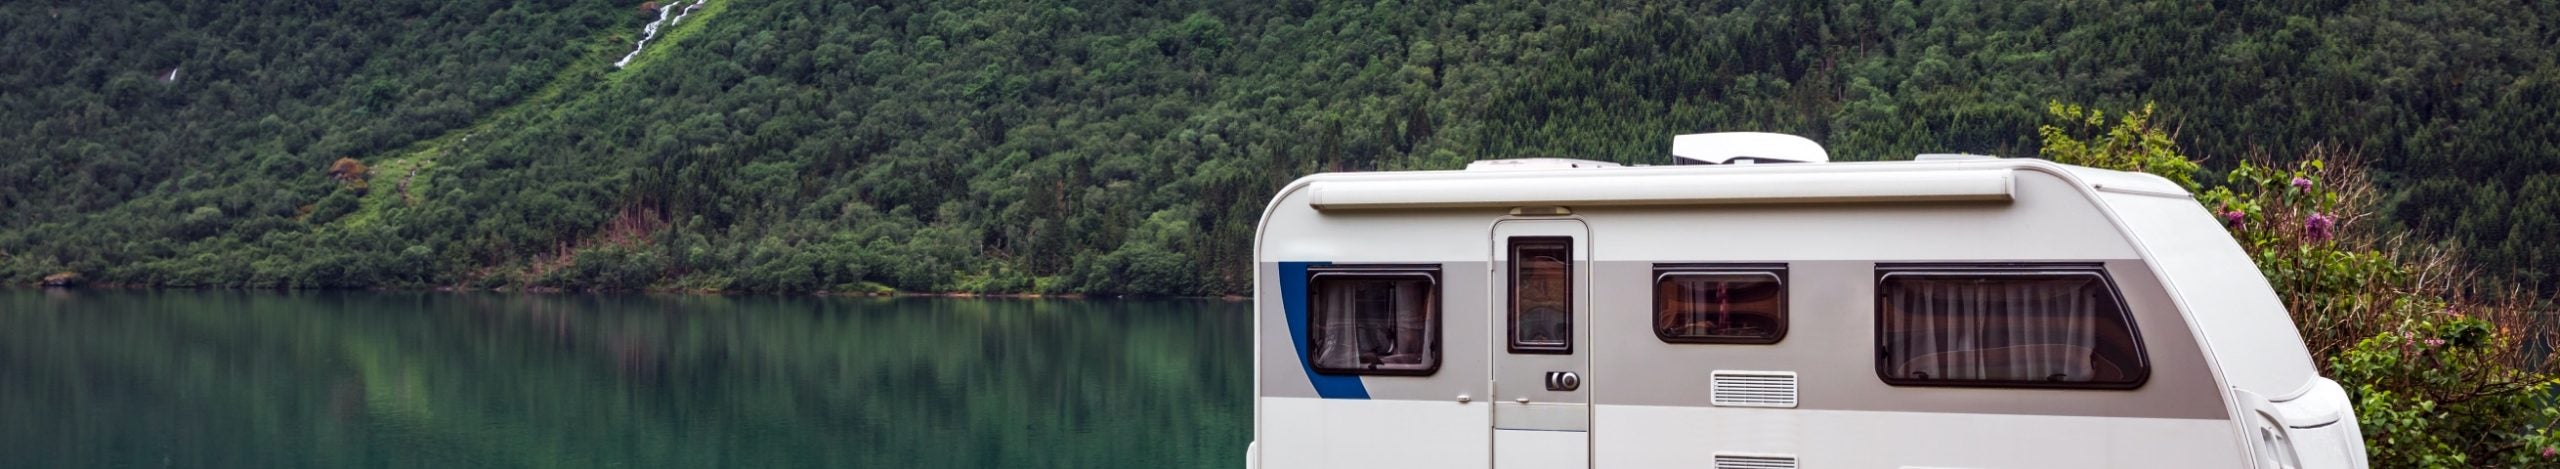 Travel Diaries – Caravan Holiday in Croatia & Slovenia